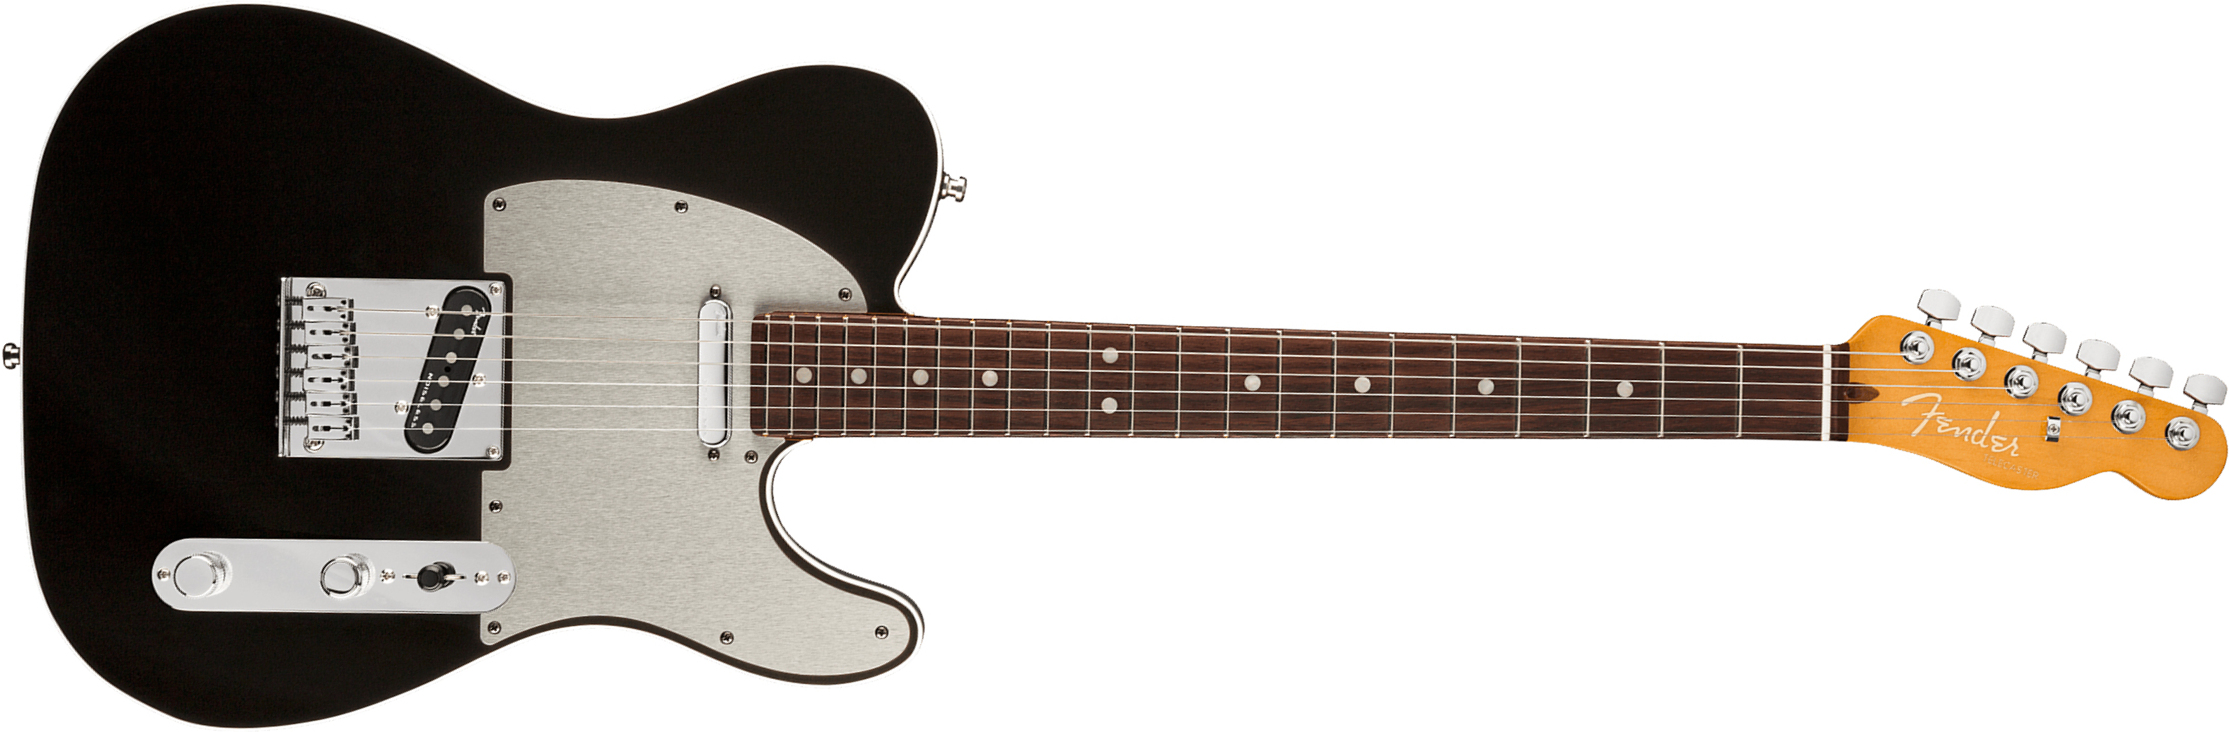 Fender Tele American Ultra 2019 Usa Rw - Texas Tea - Televorm elektrische gitaar - Main picture